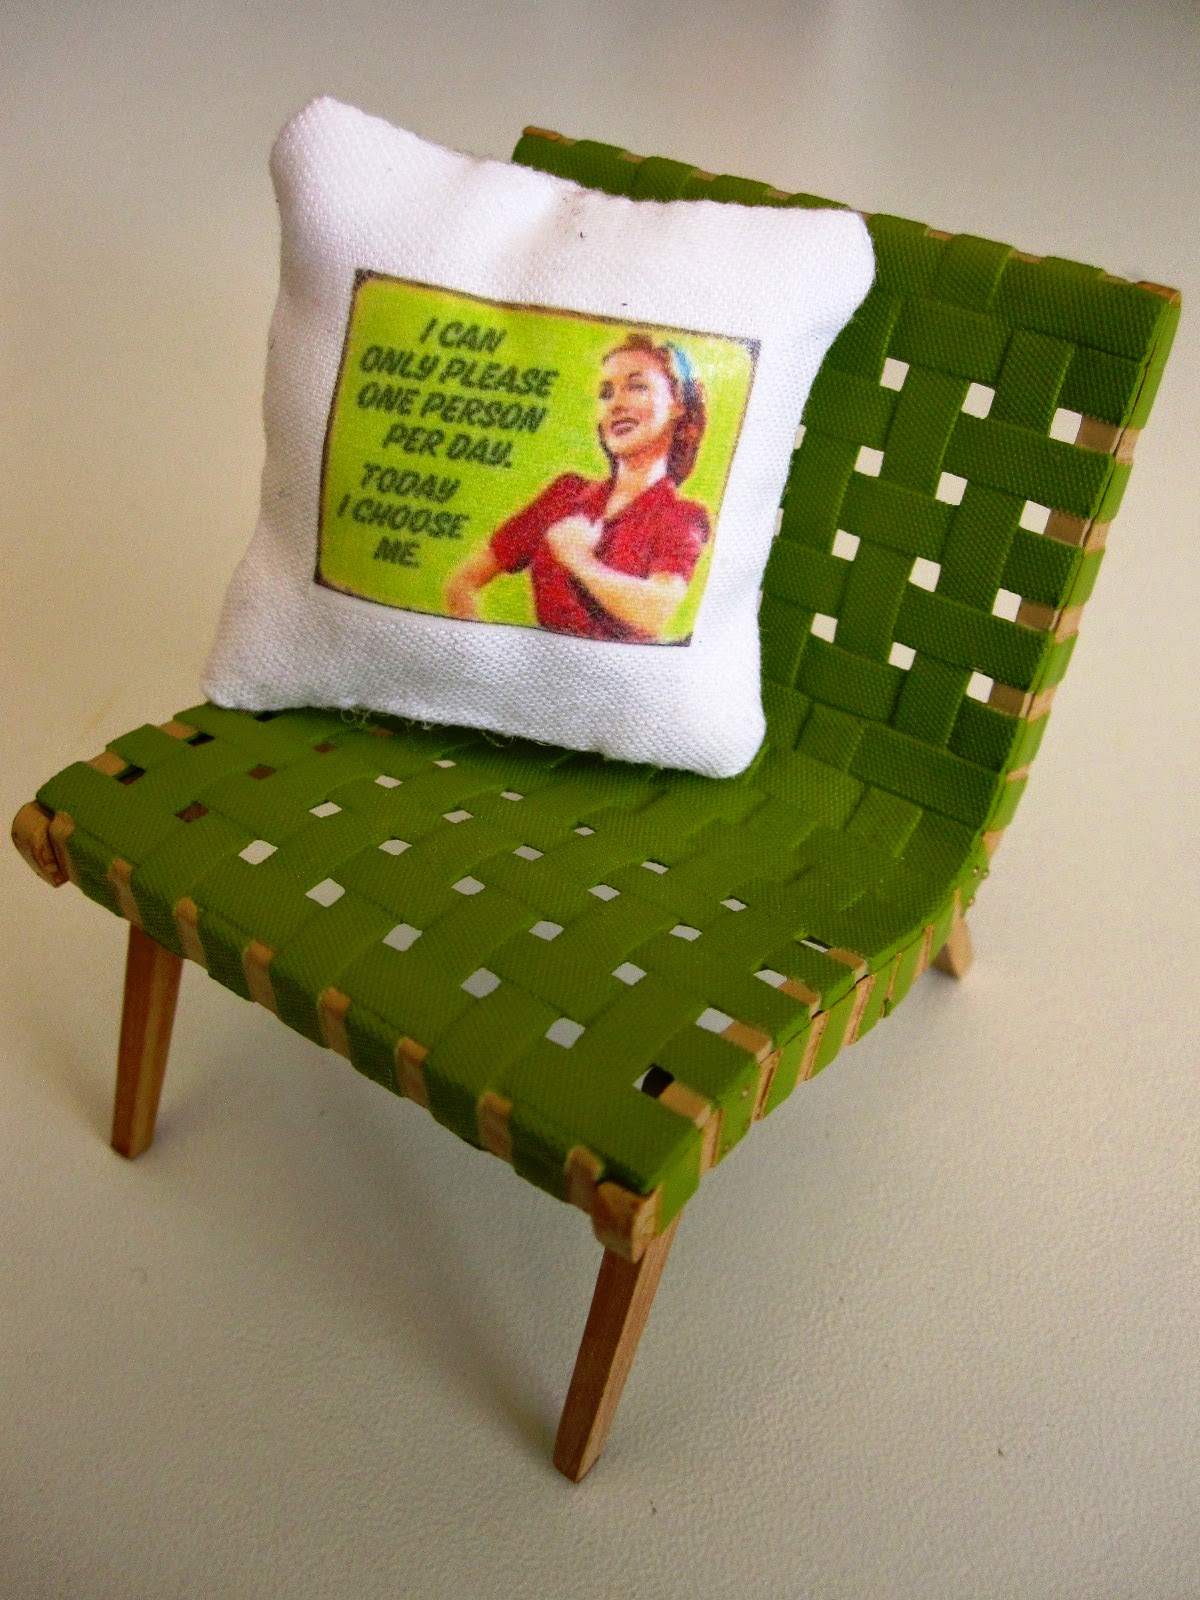 Midcentury modern miniature Jens Rimson chair with cushion.